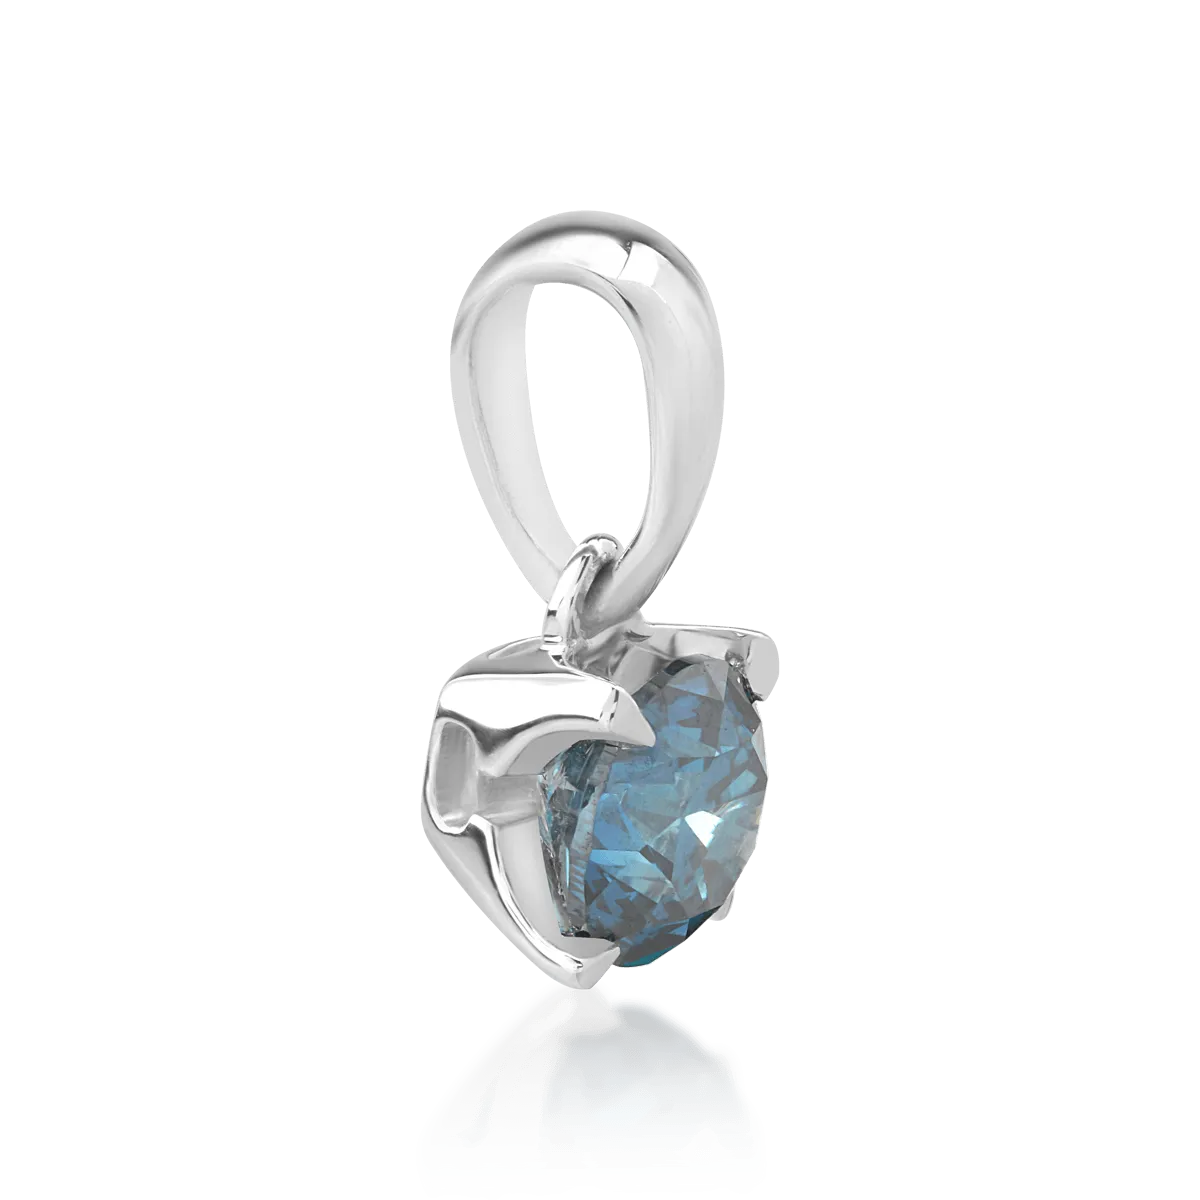 18K white gold pendant with 0.44ct blue diamond